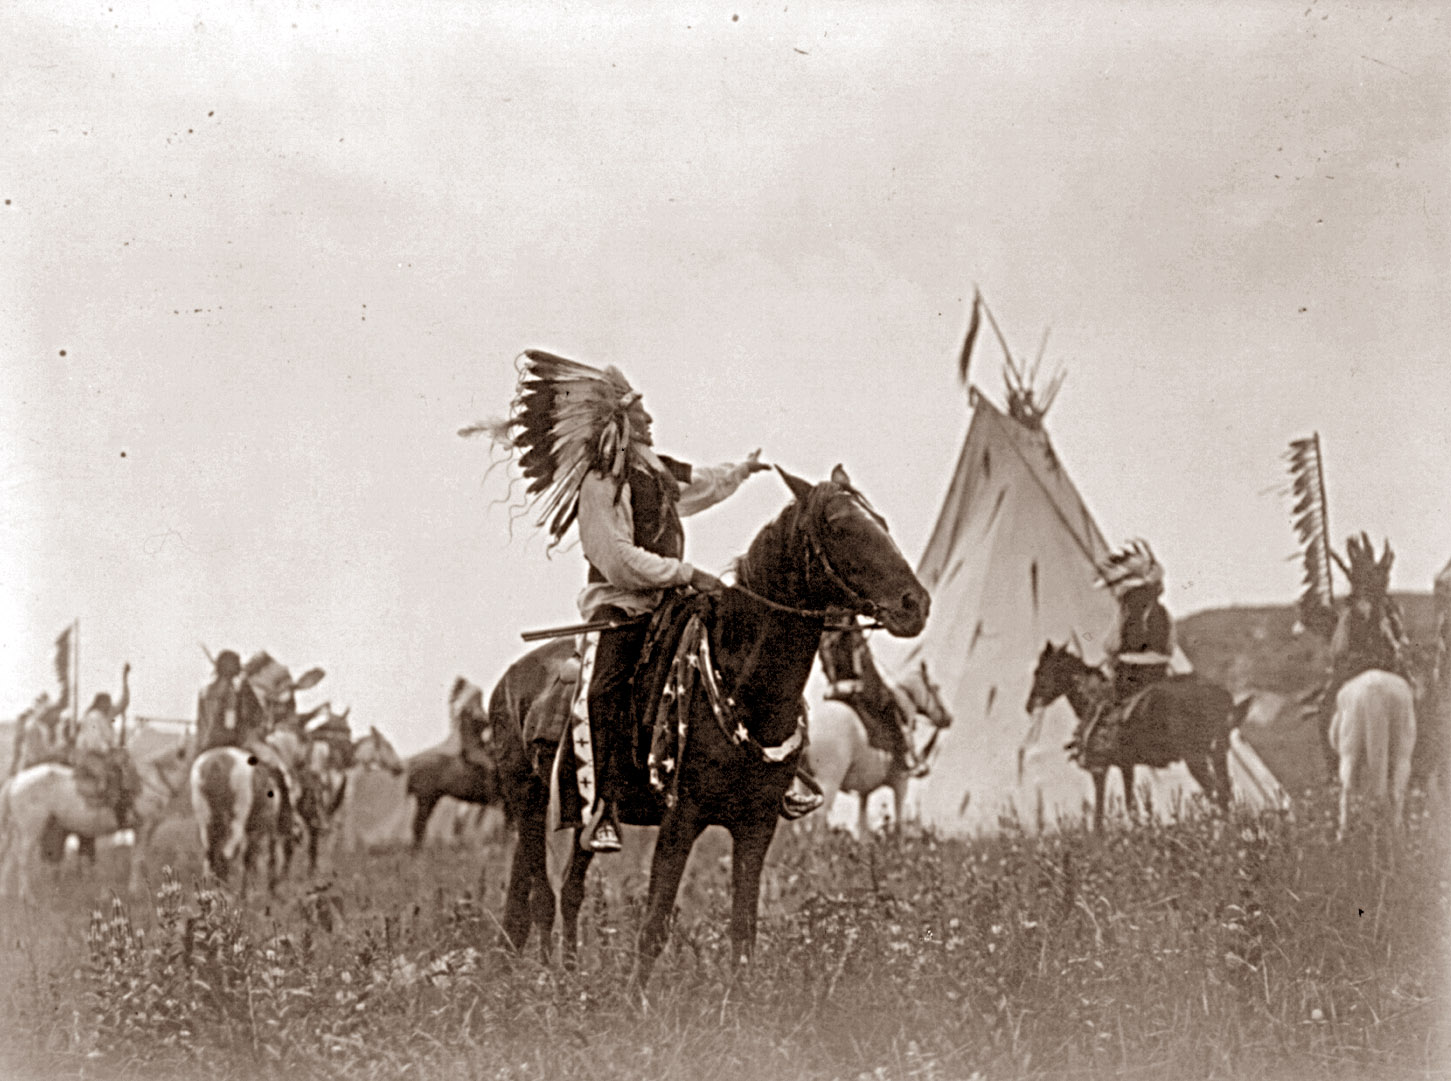 Indians On Horseback